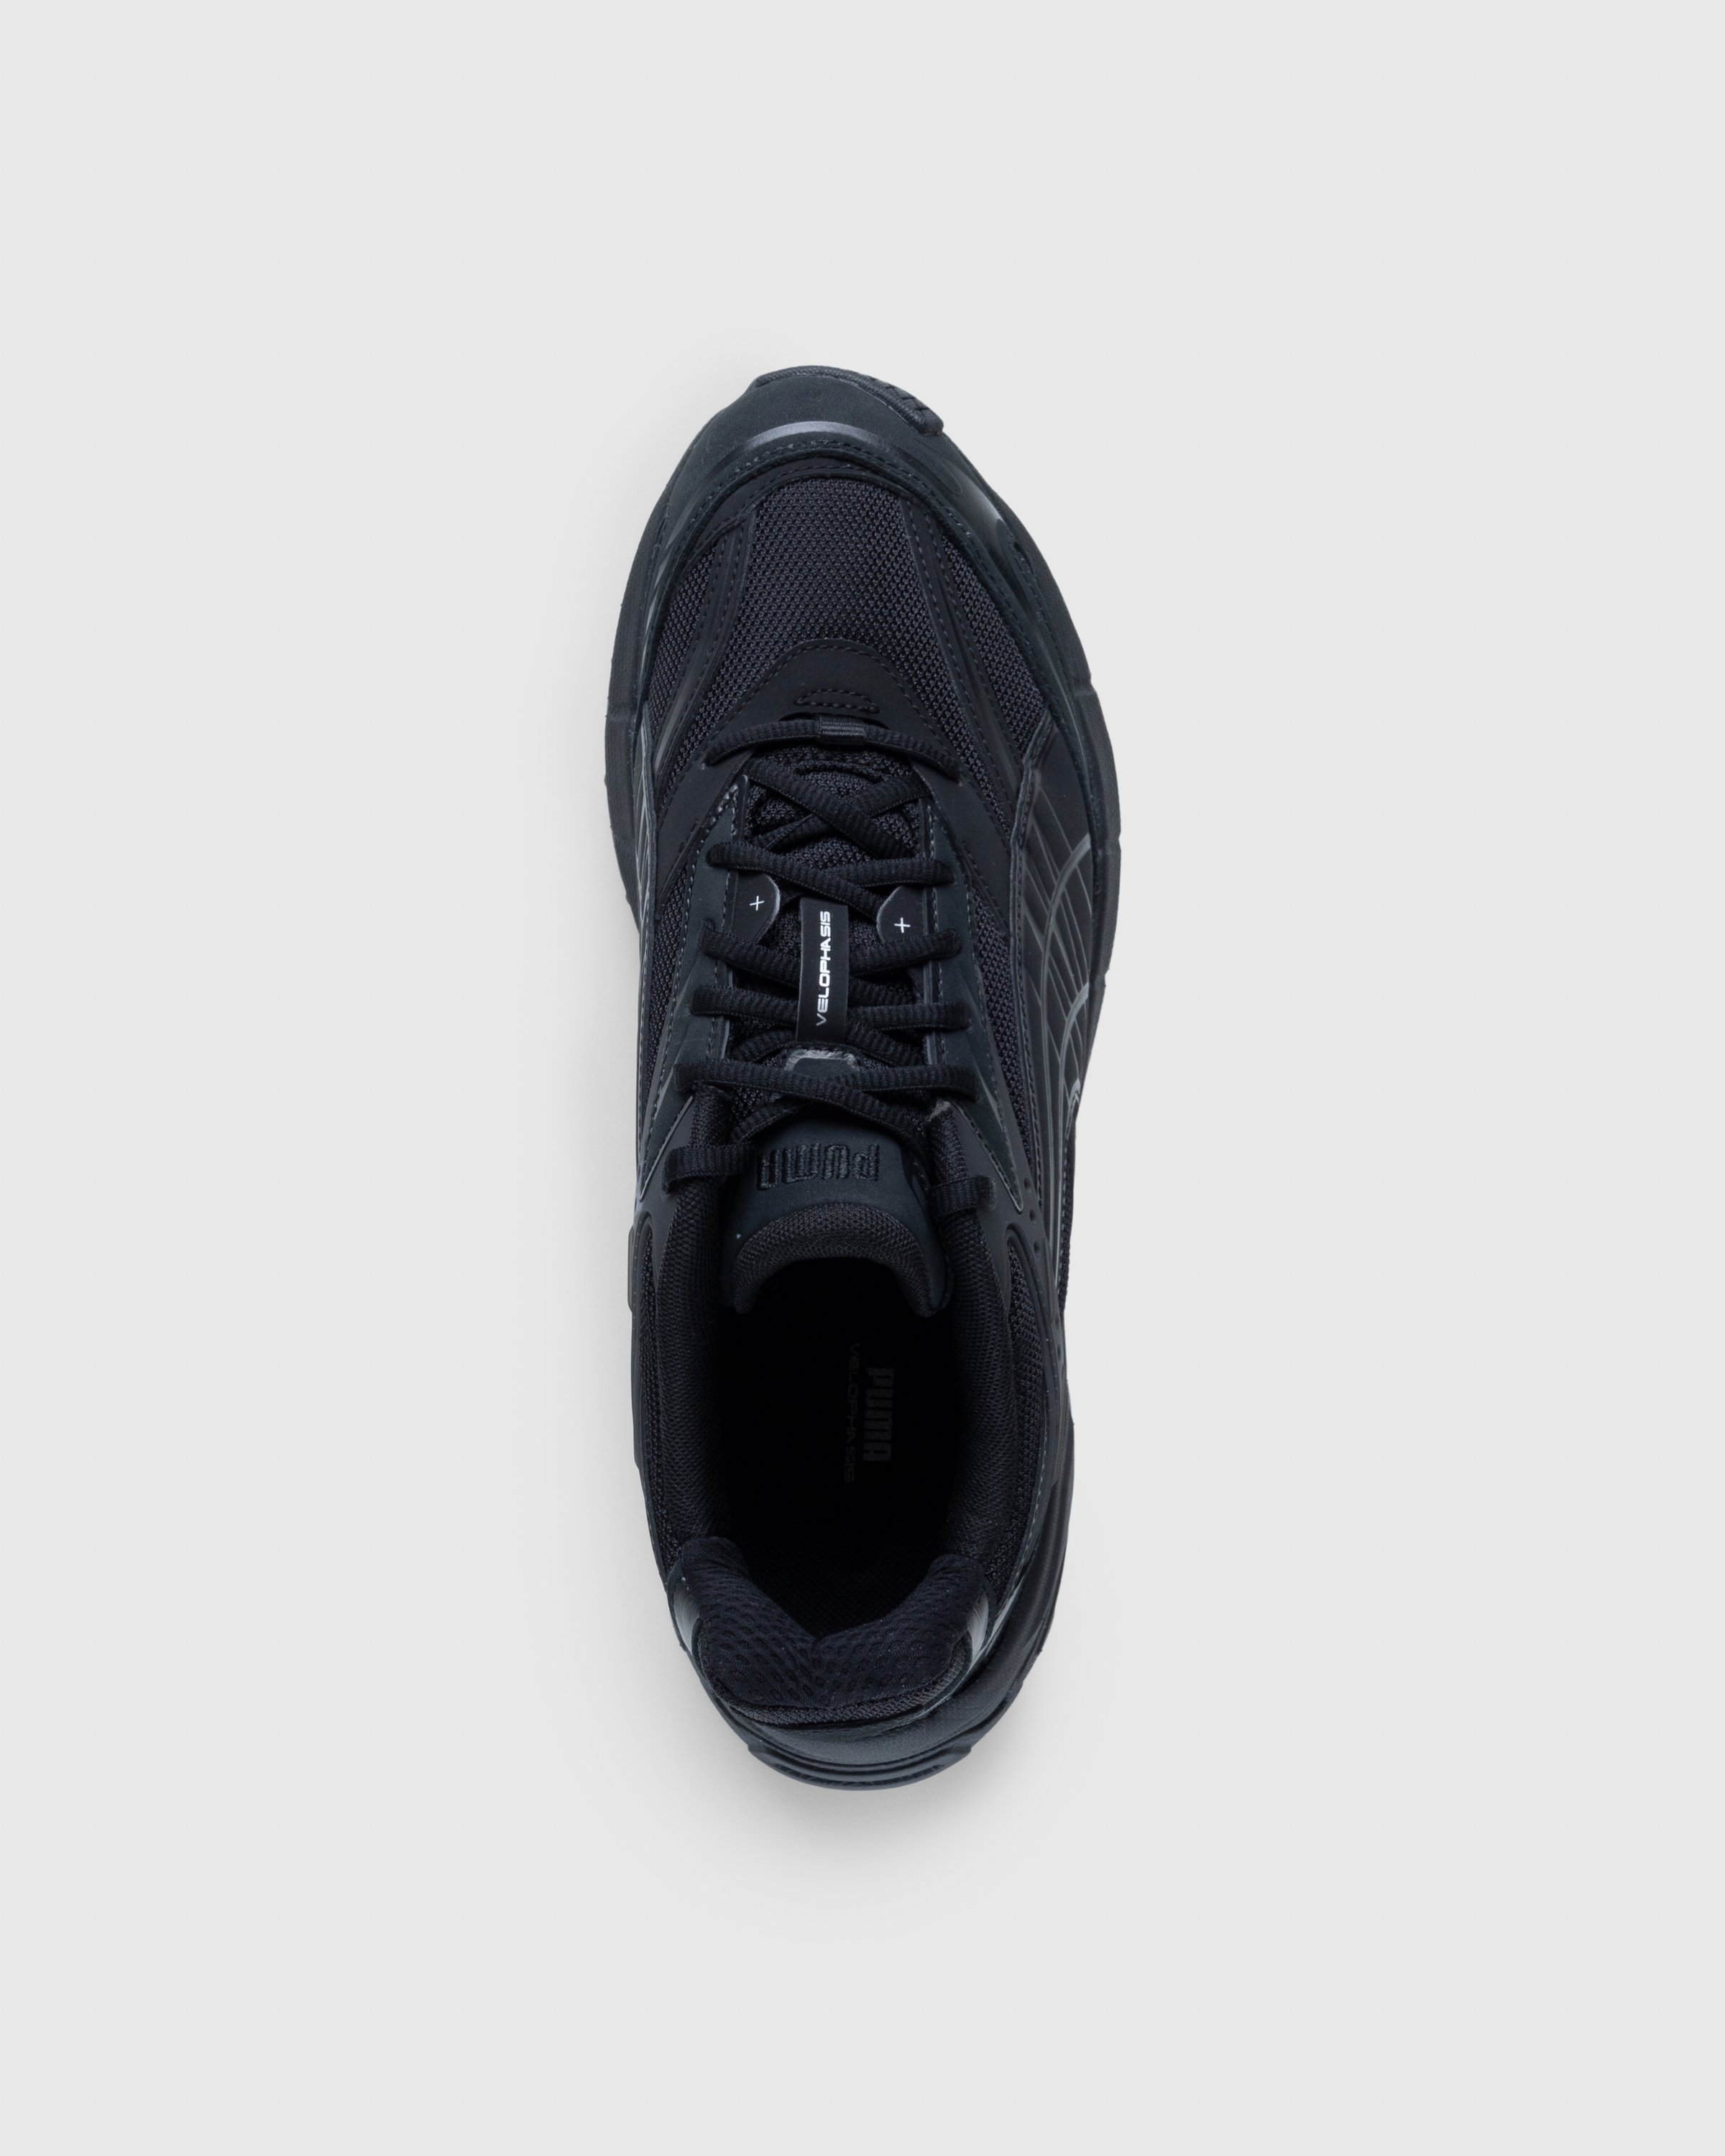 Puma - Velophasis PRM Black - Footwear - Black - Image 5